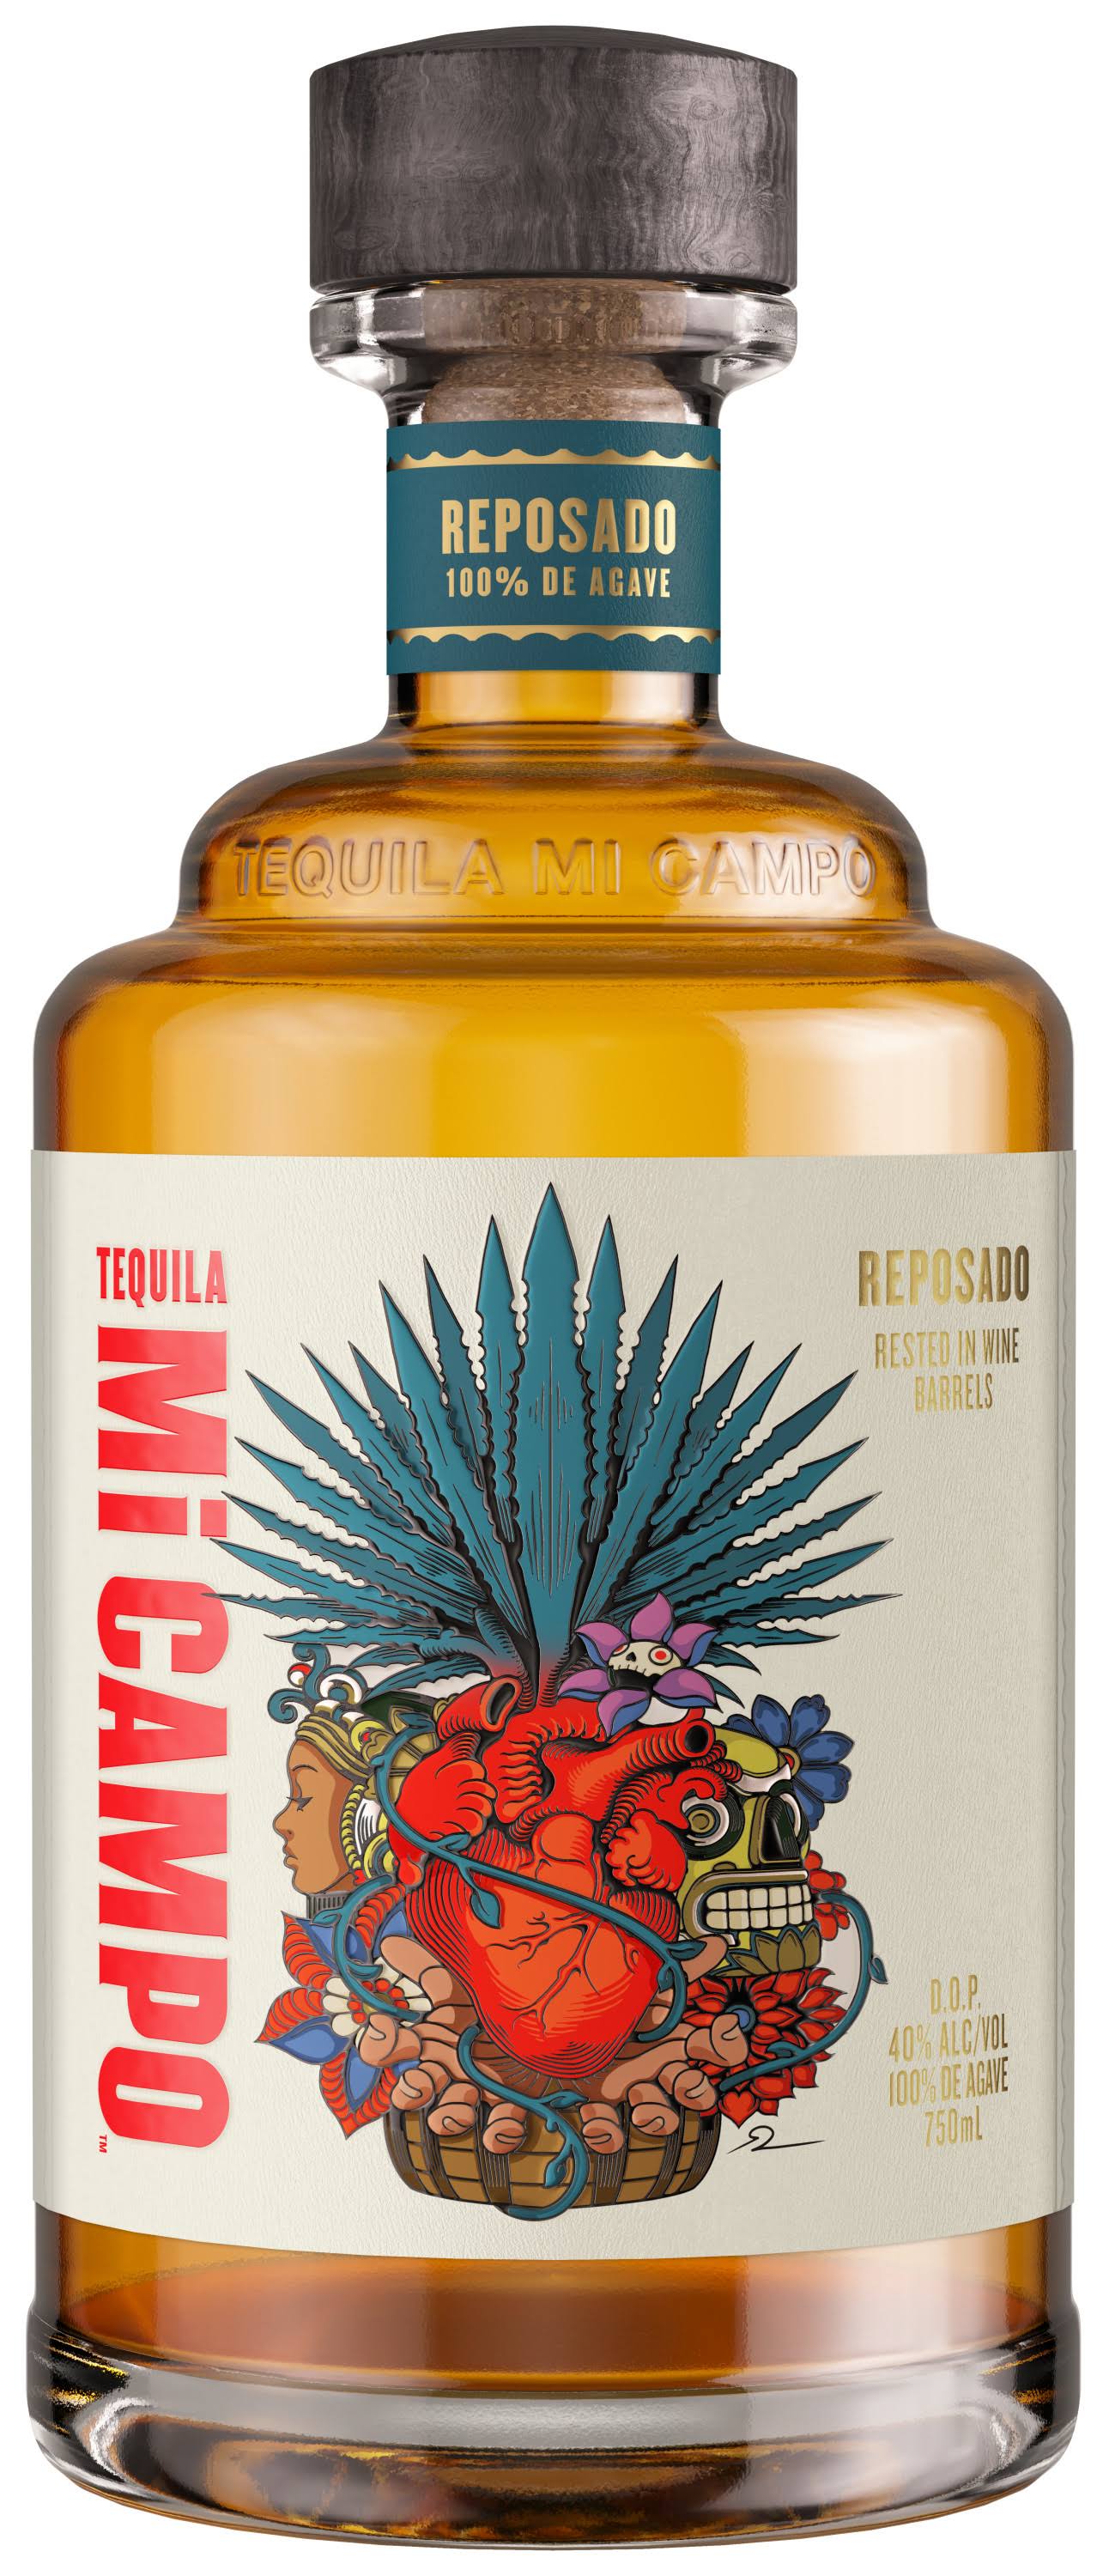 Mi Campo Tequila, Reposado, 100% De Agave - 750 ml